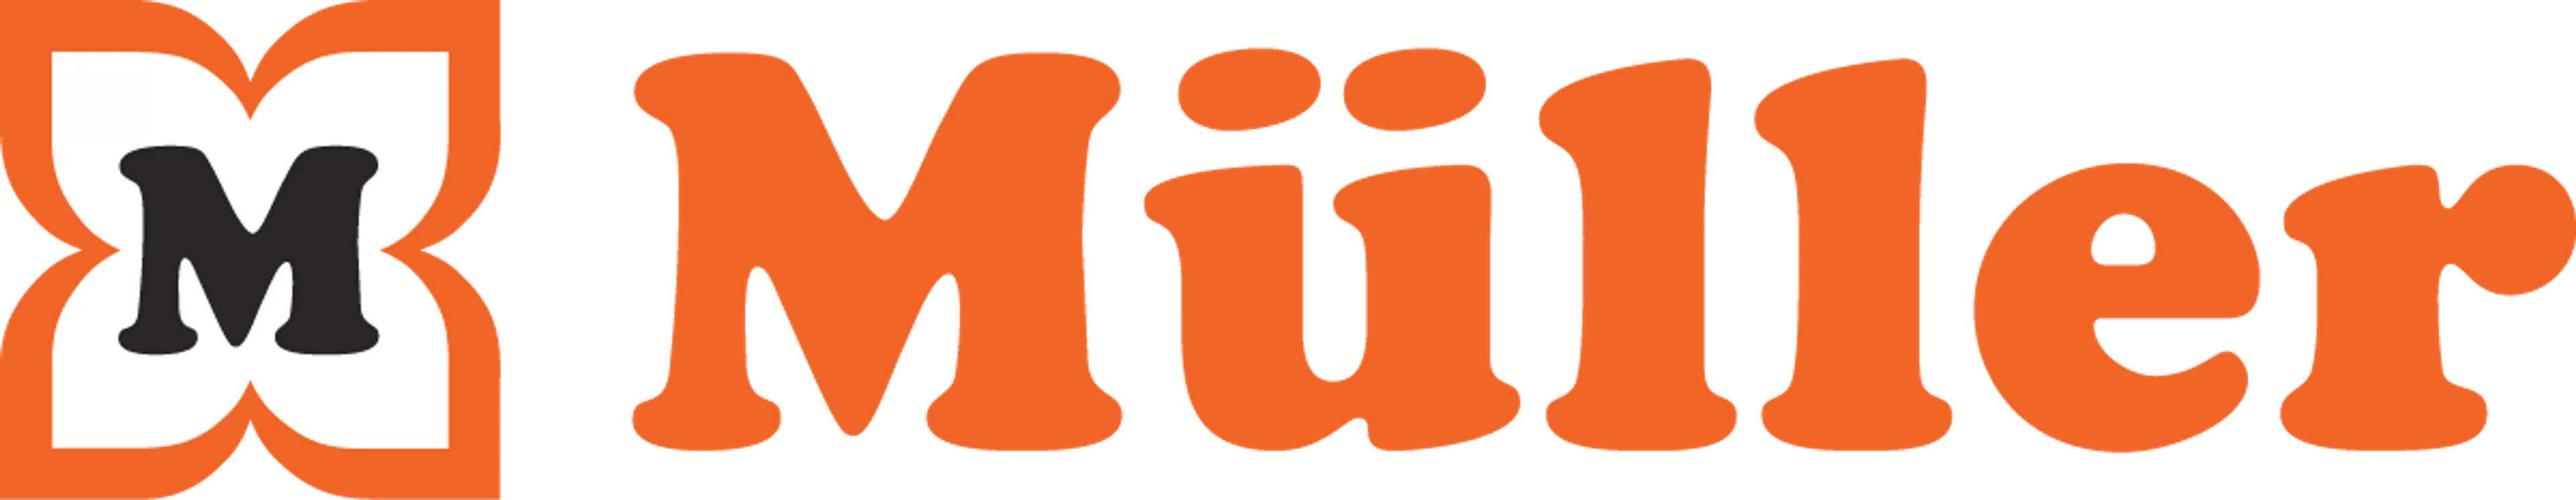 MÜLLER logo